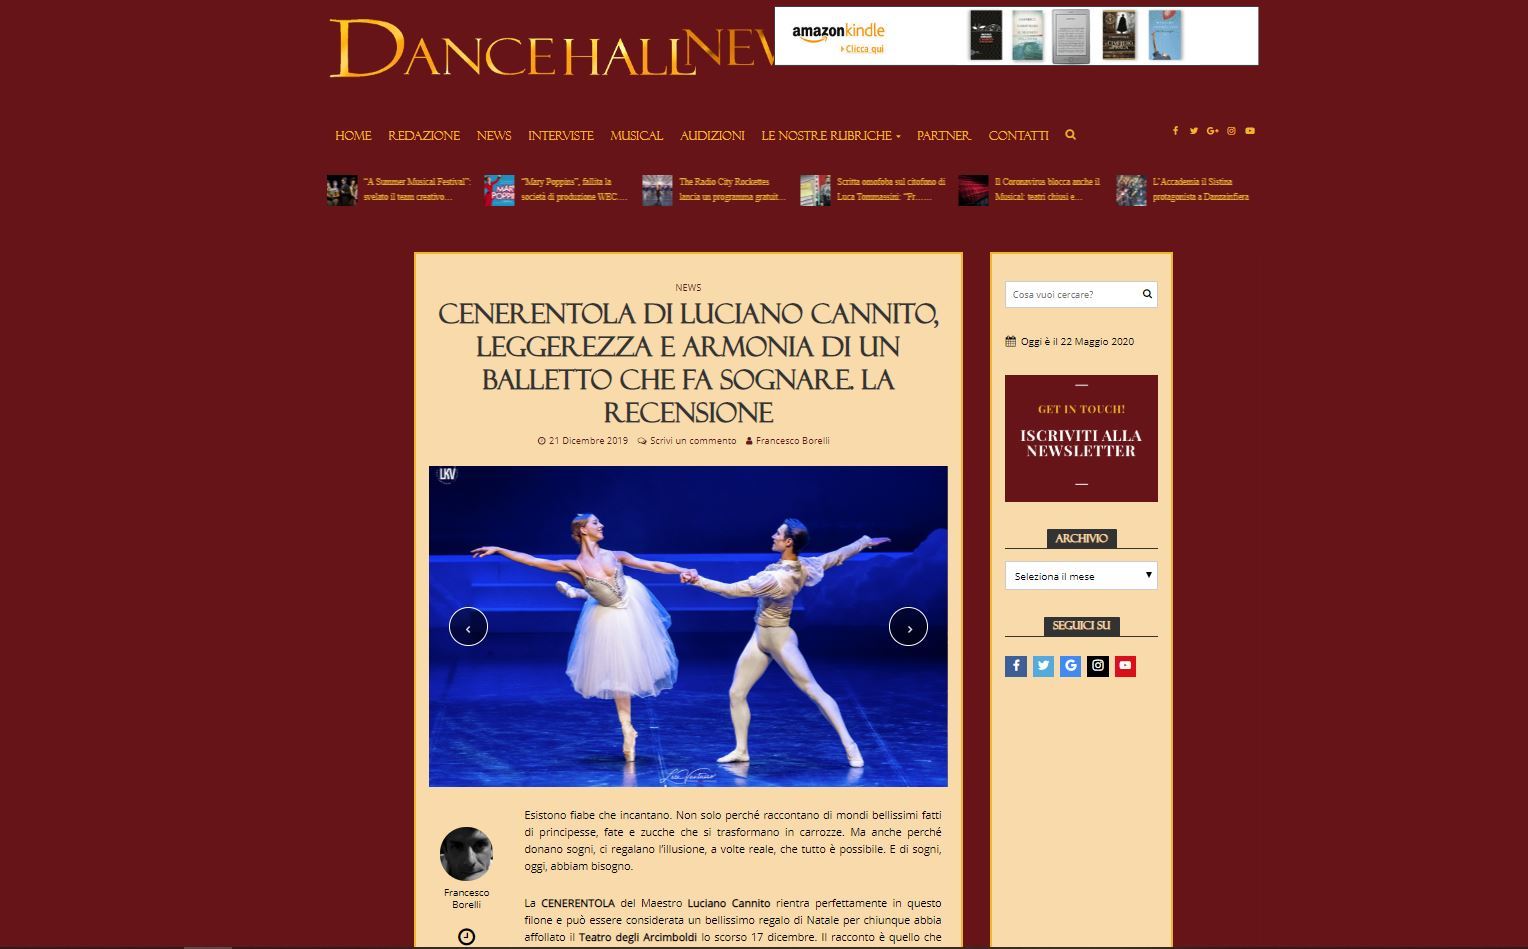 DANCE HALL NEWS Cenerentola - 2019